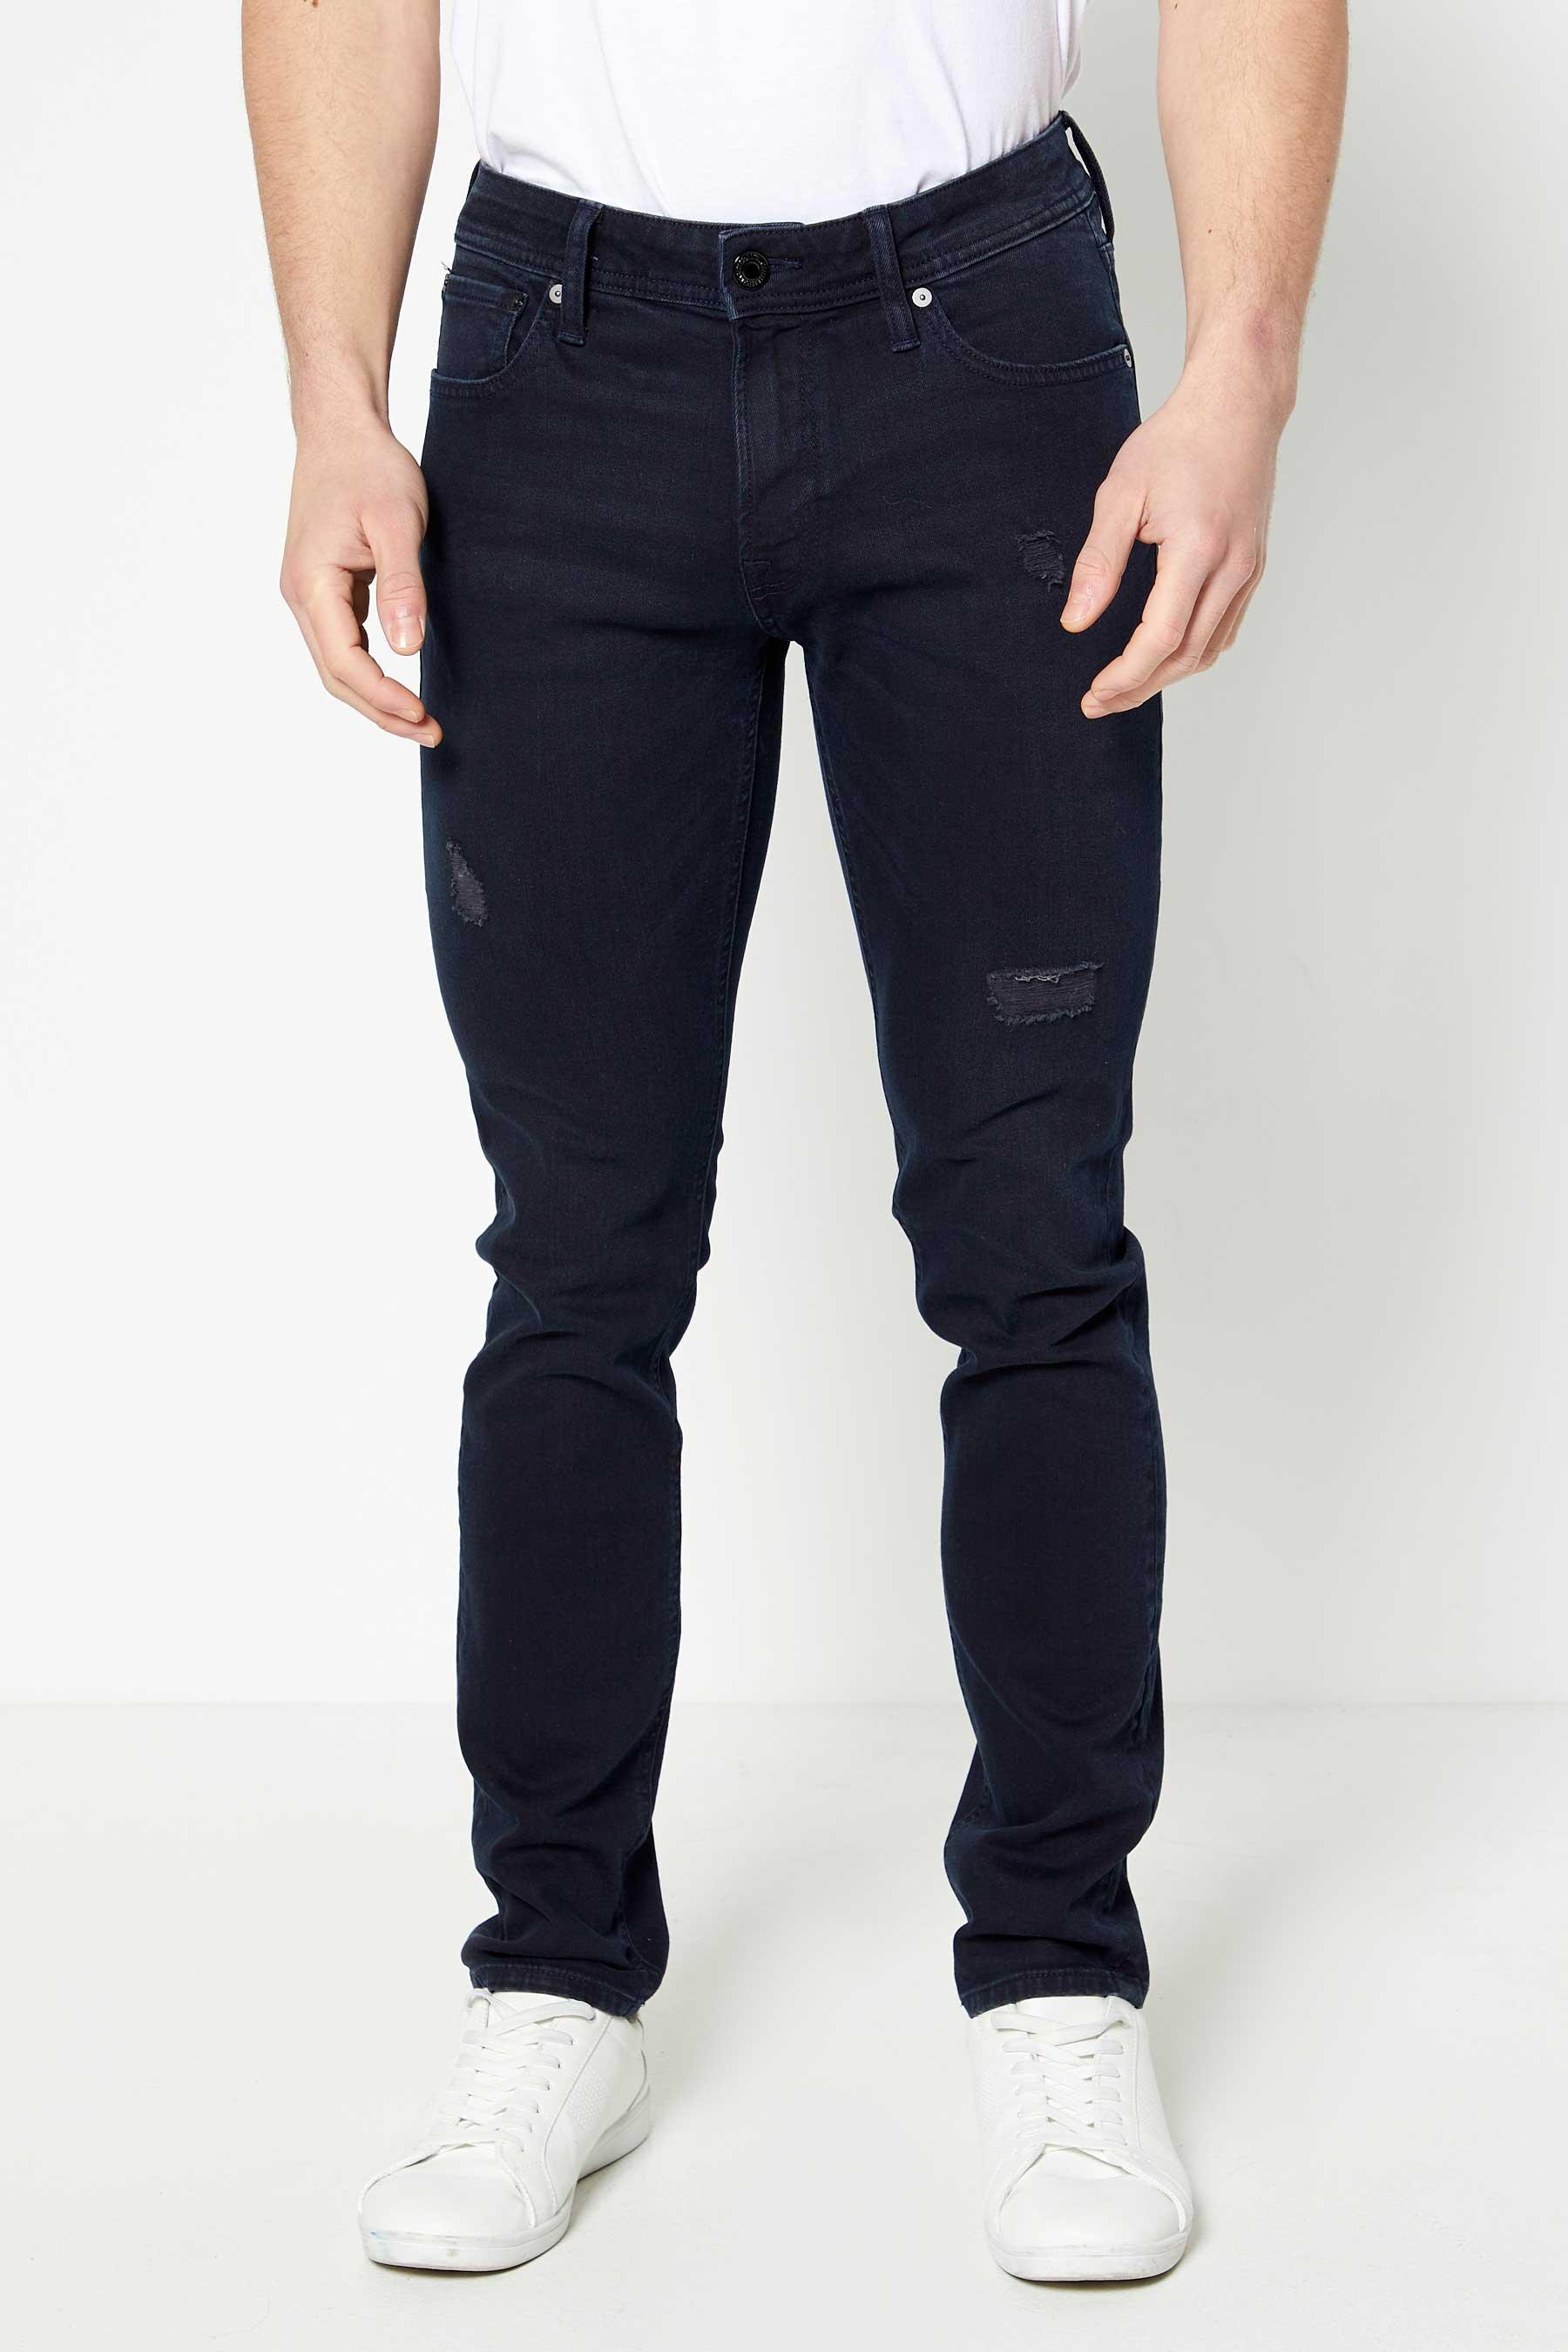 jack and jones liam skinny fit black ripped jeans - mens - size: 30 waist 32 leg